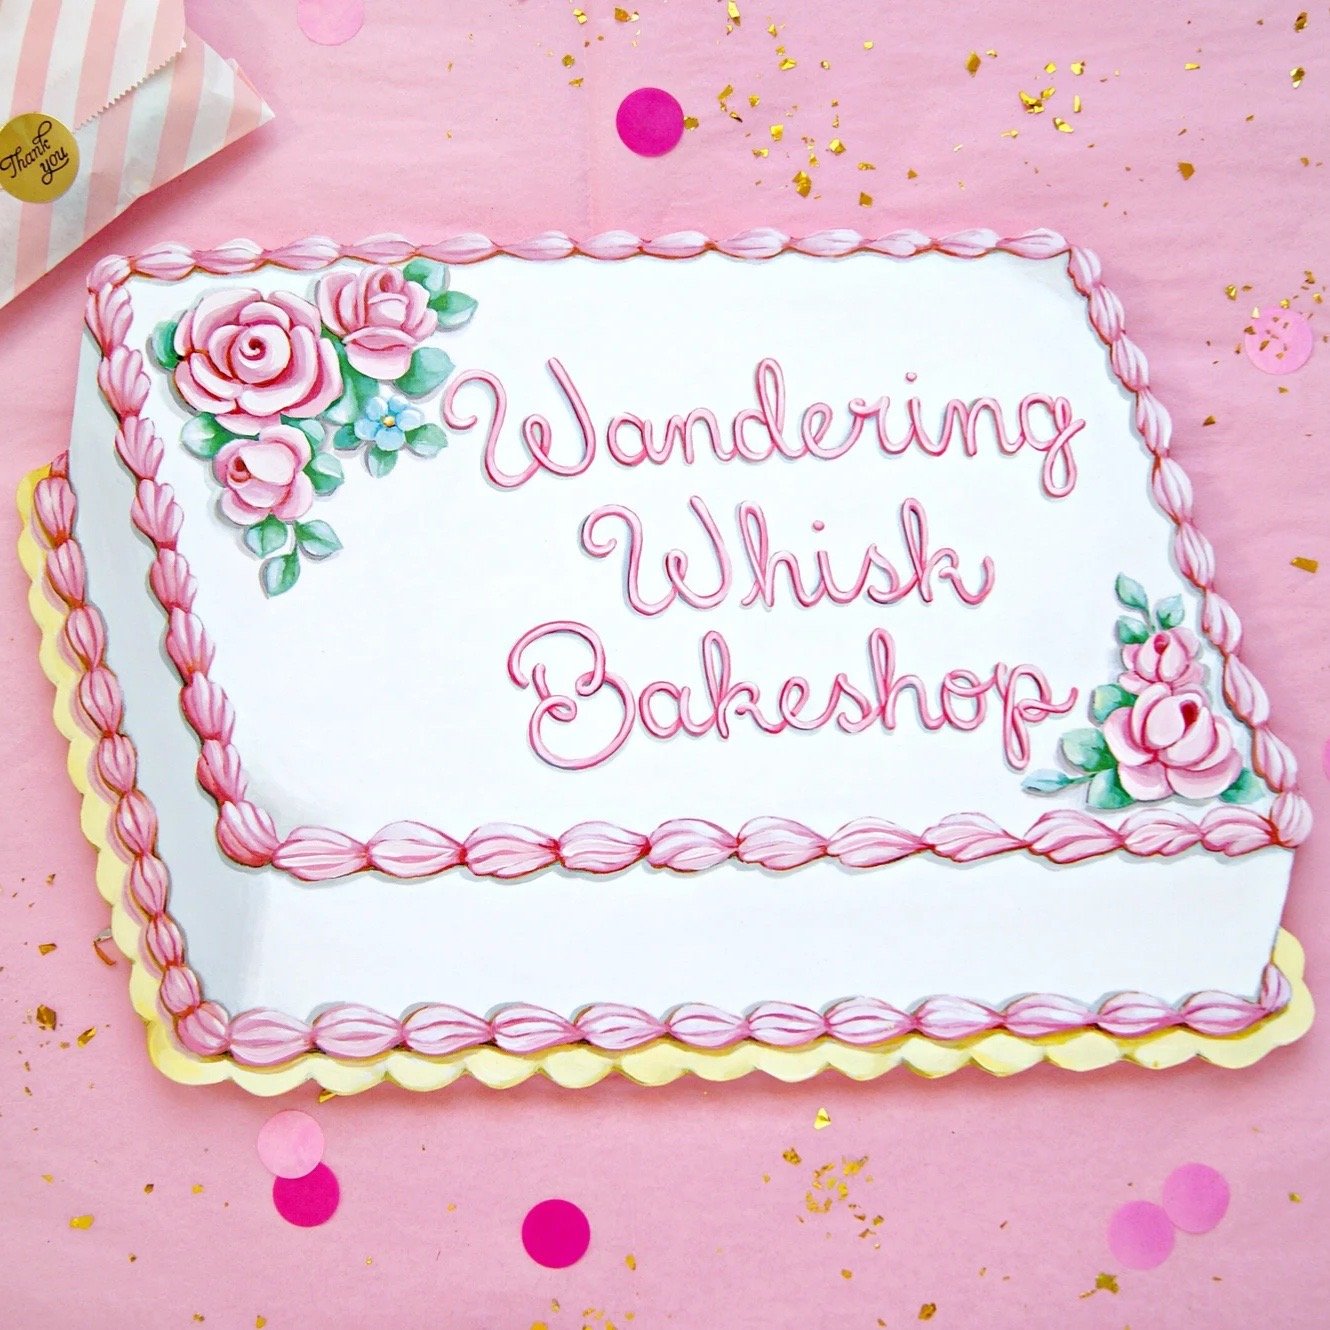 ☾: Photo | Cake writing, Funny birthday cakes, Creative birthday cakes